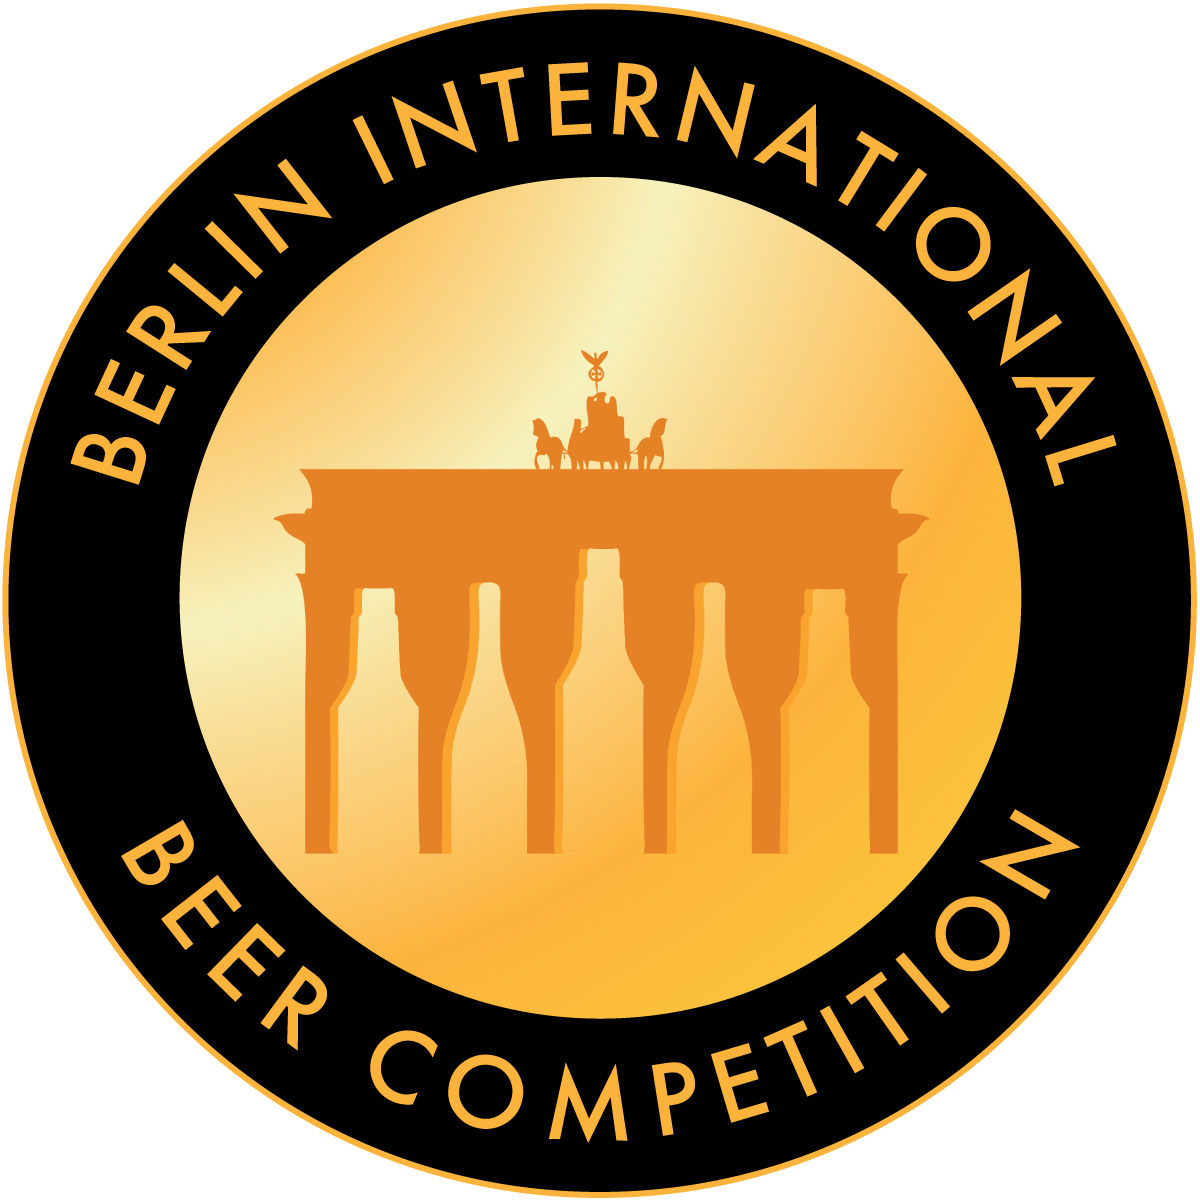 Berlin International Beer Competition